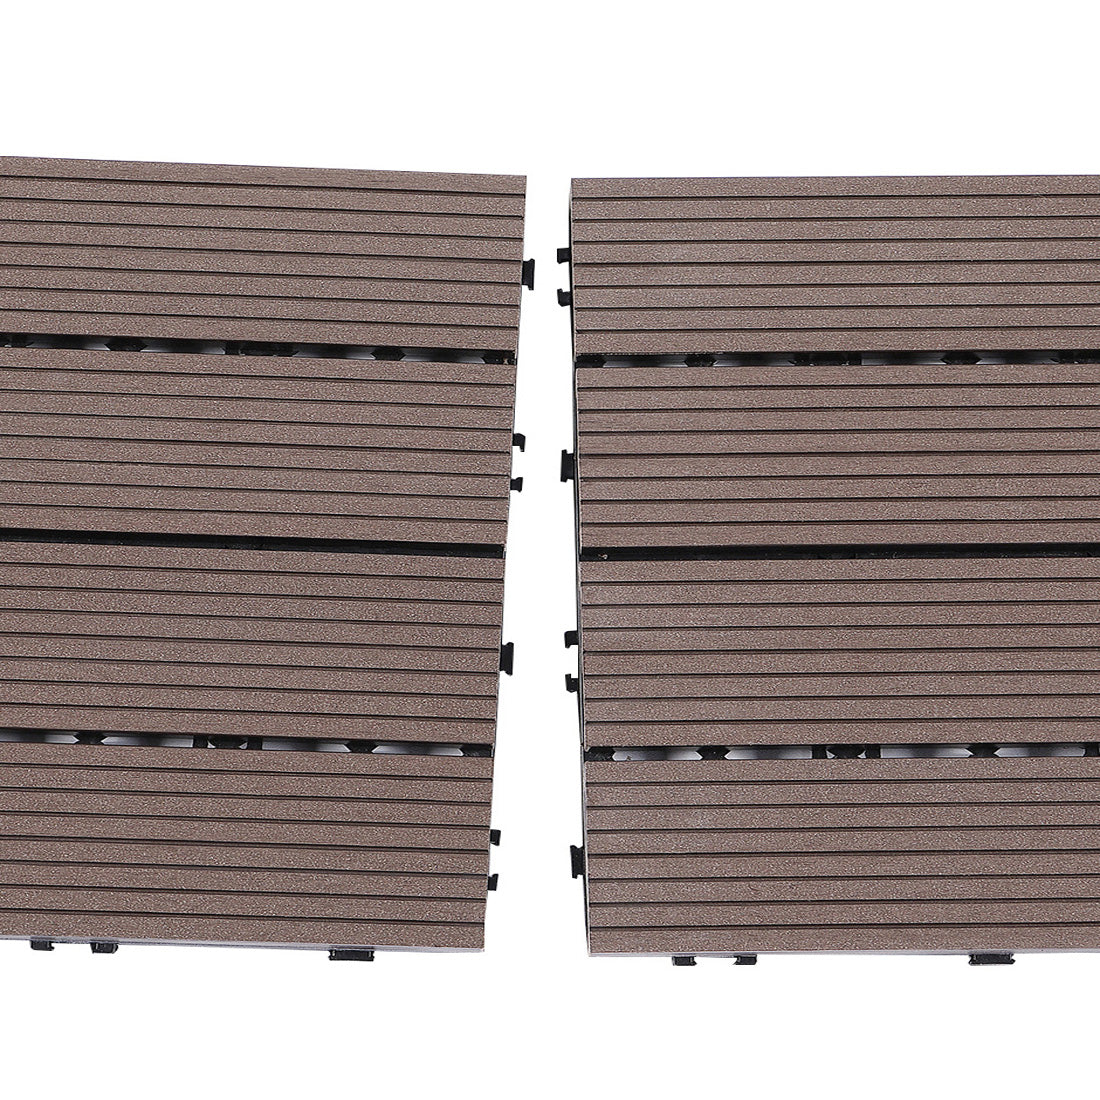 12''x 24'' Interlocking Composite Deck Tiles - Brown (Pack of 10)